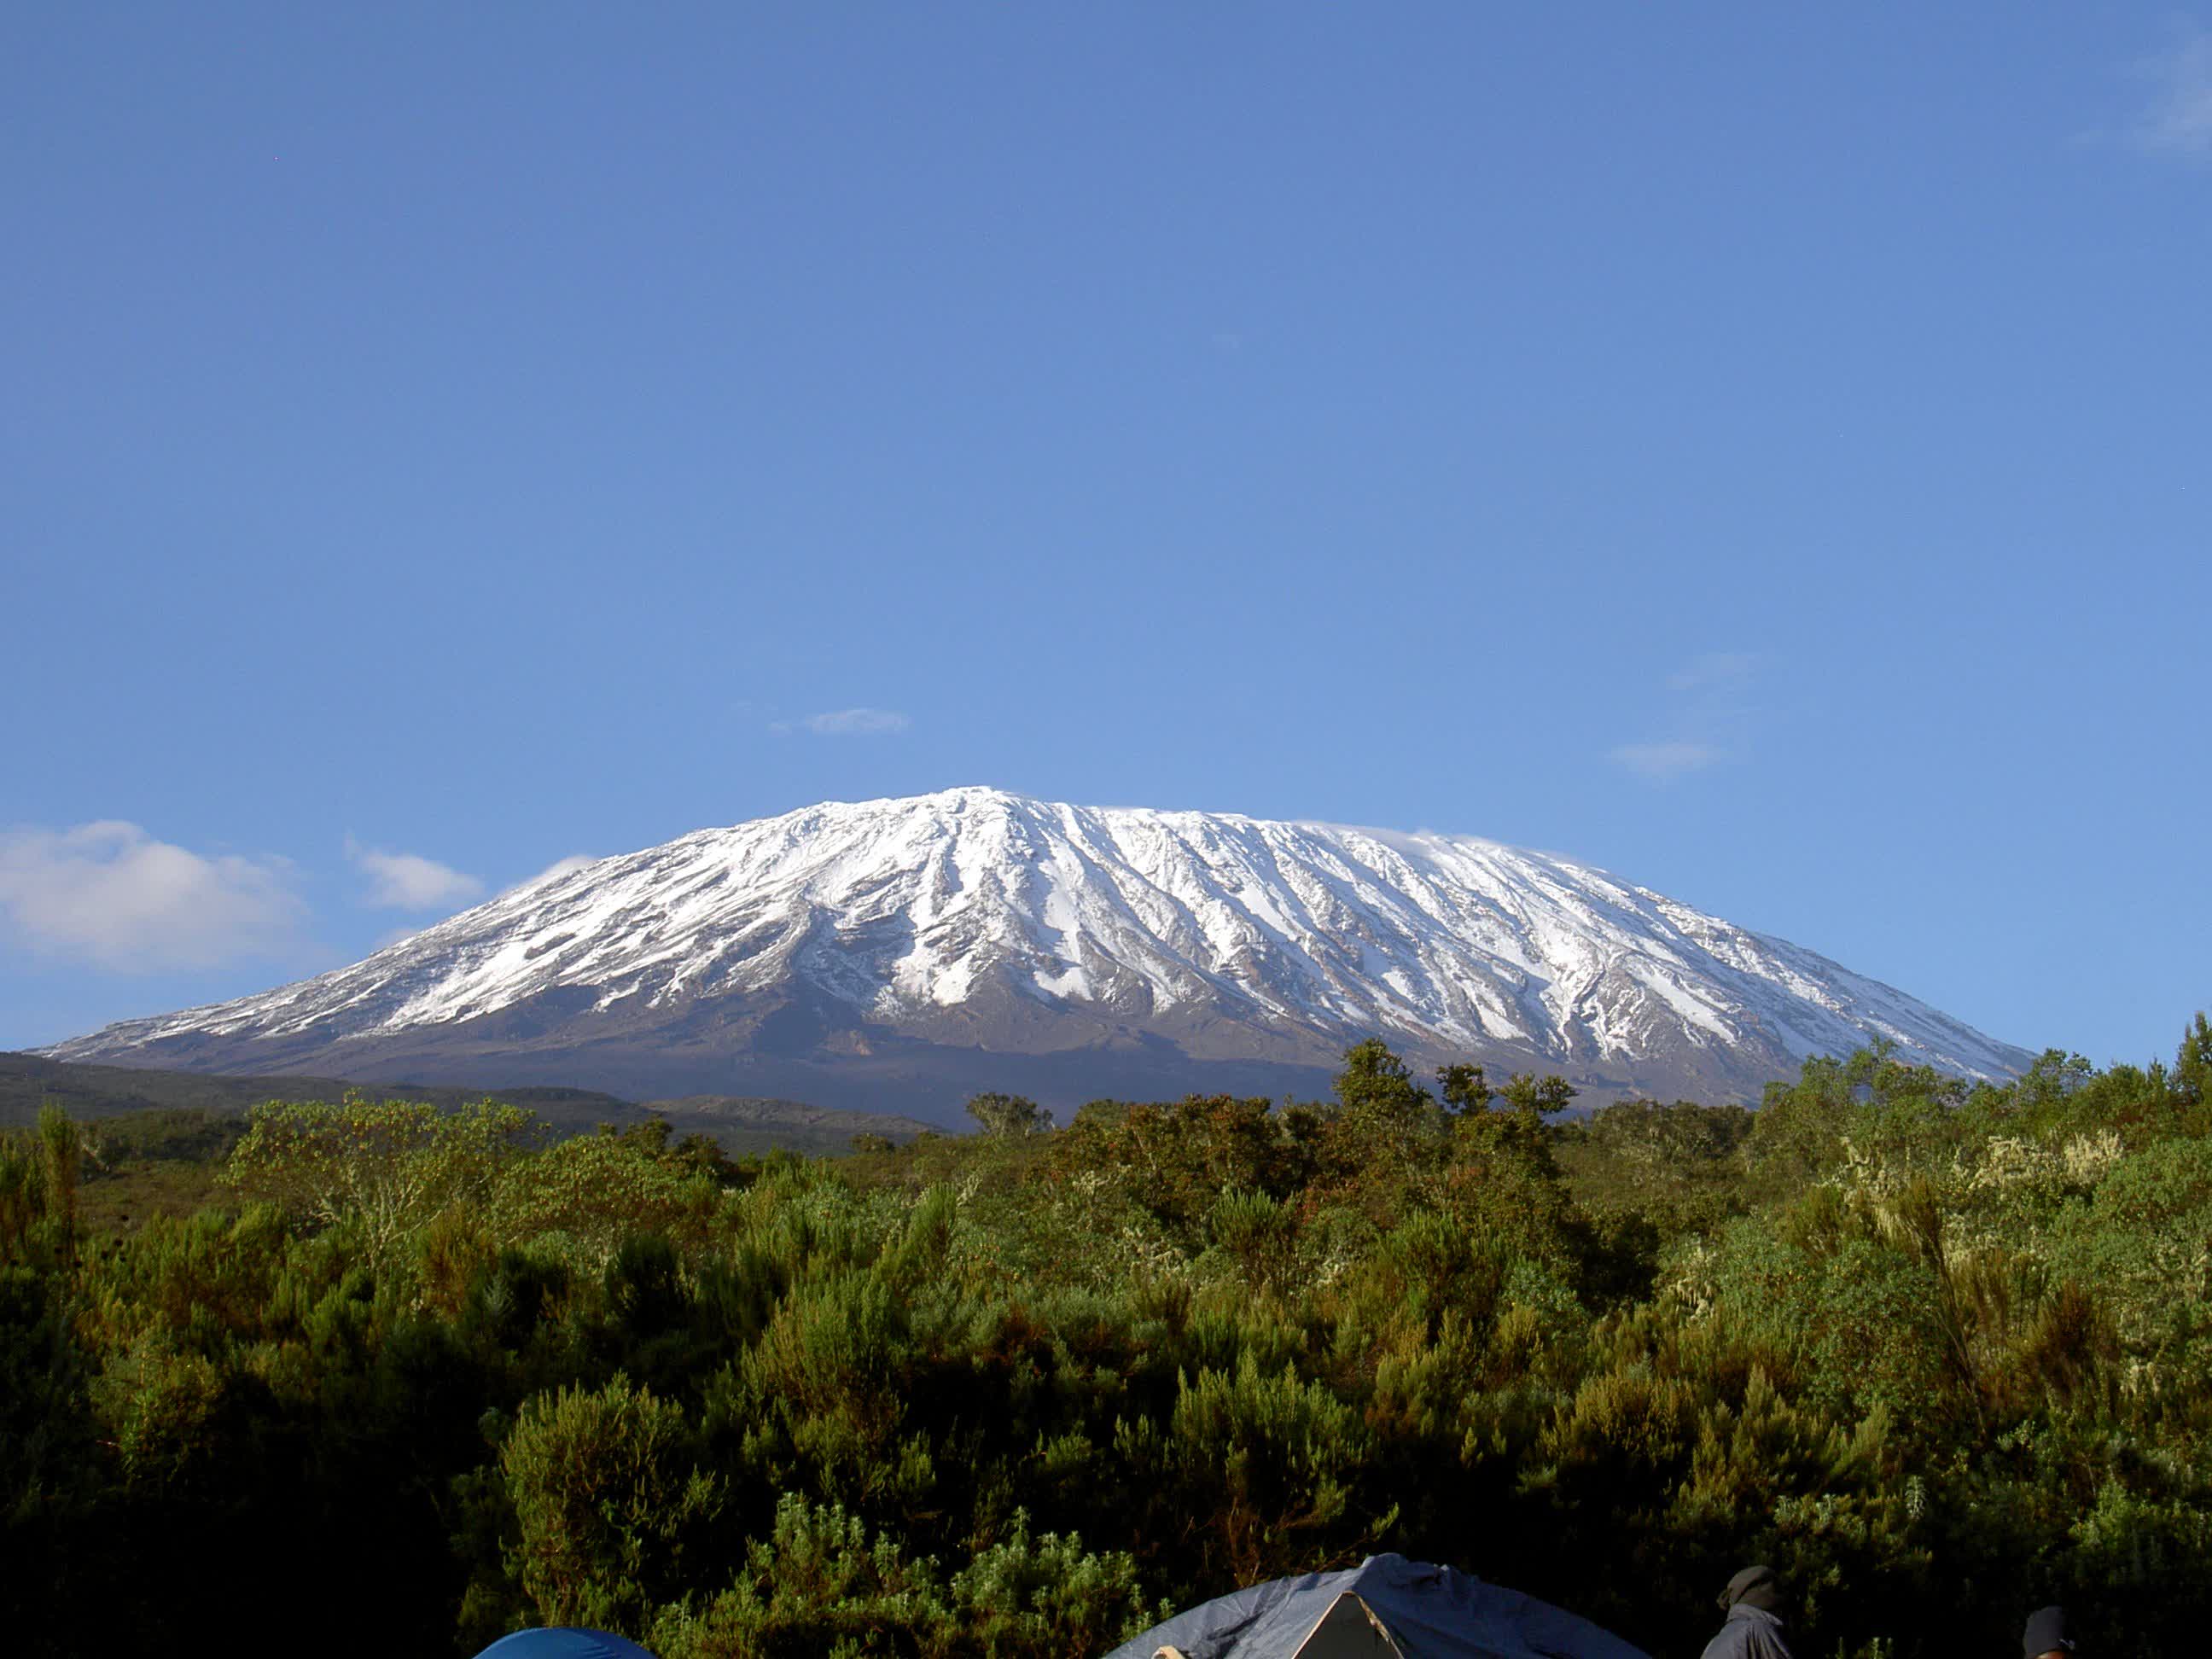 Mount Kilimanjaro now has high-speed internet connectivity